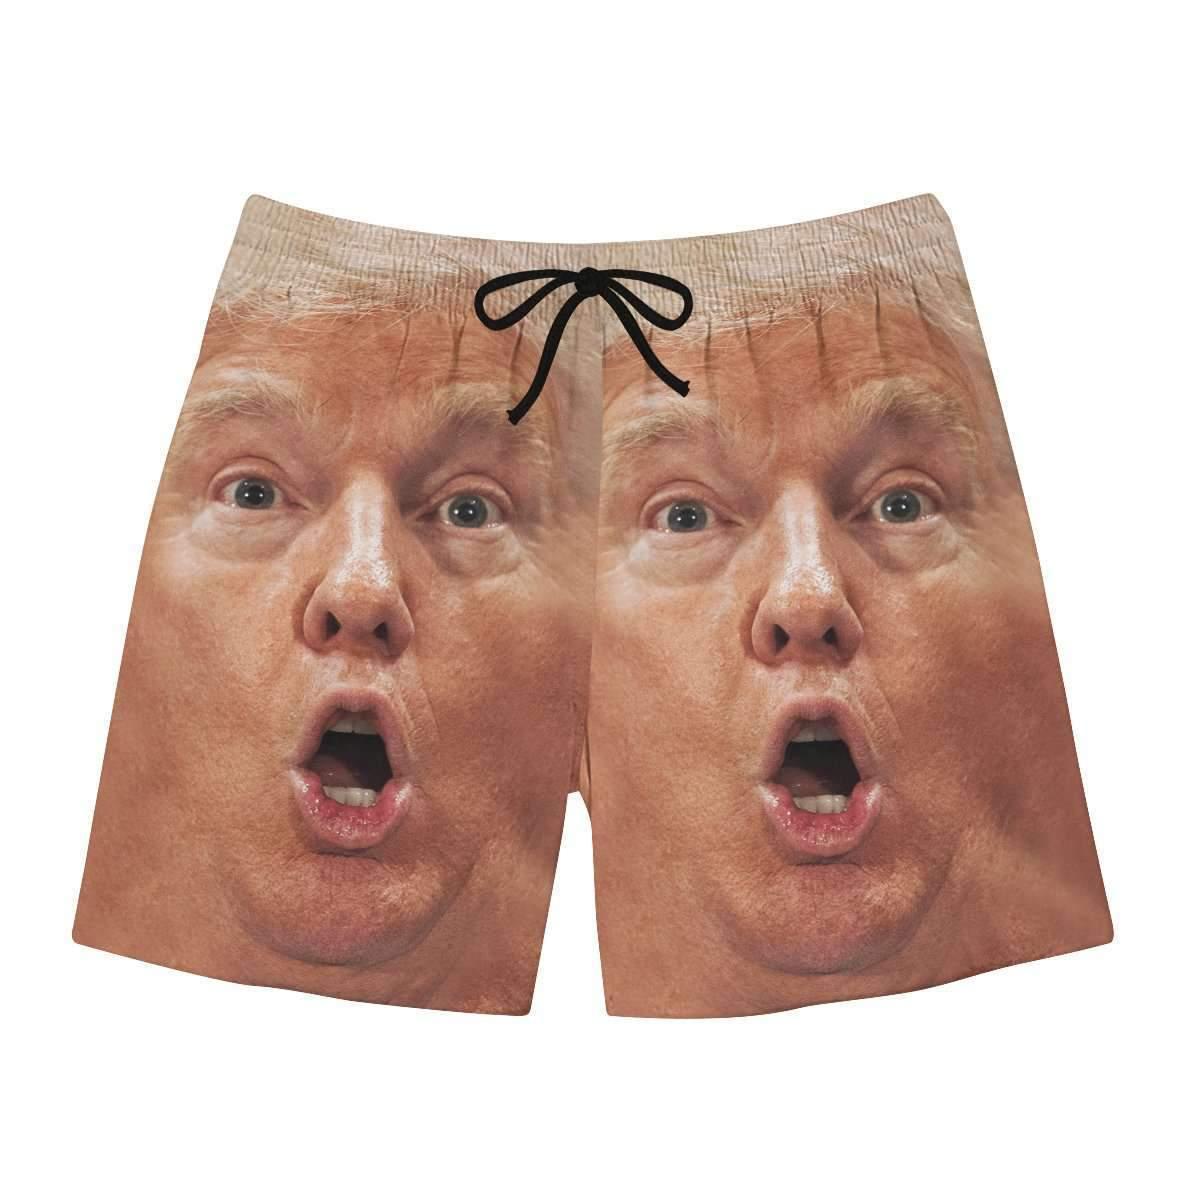 shocked-trump-swim-trunks.png